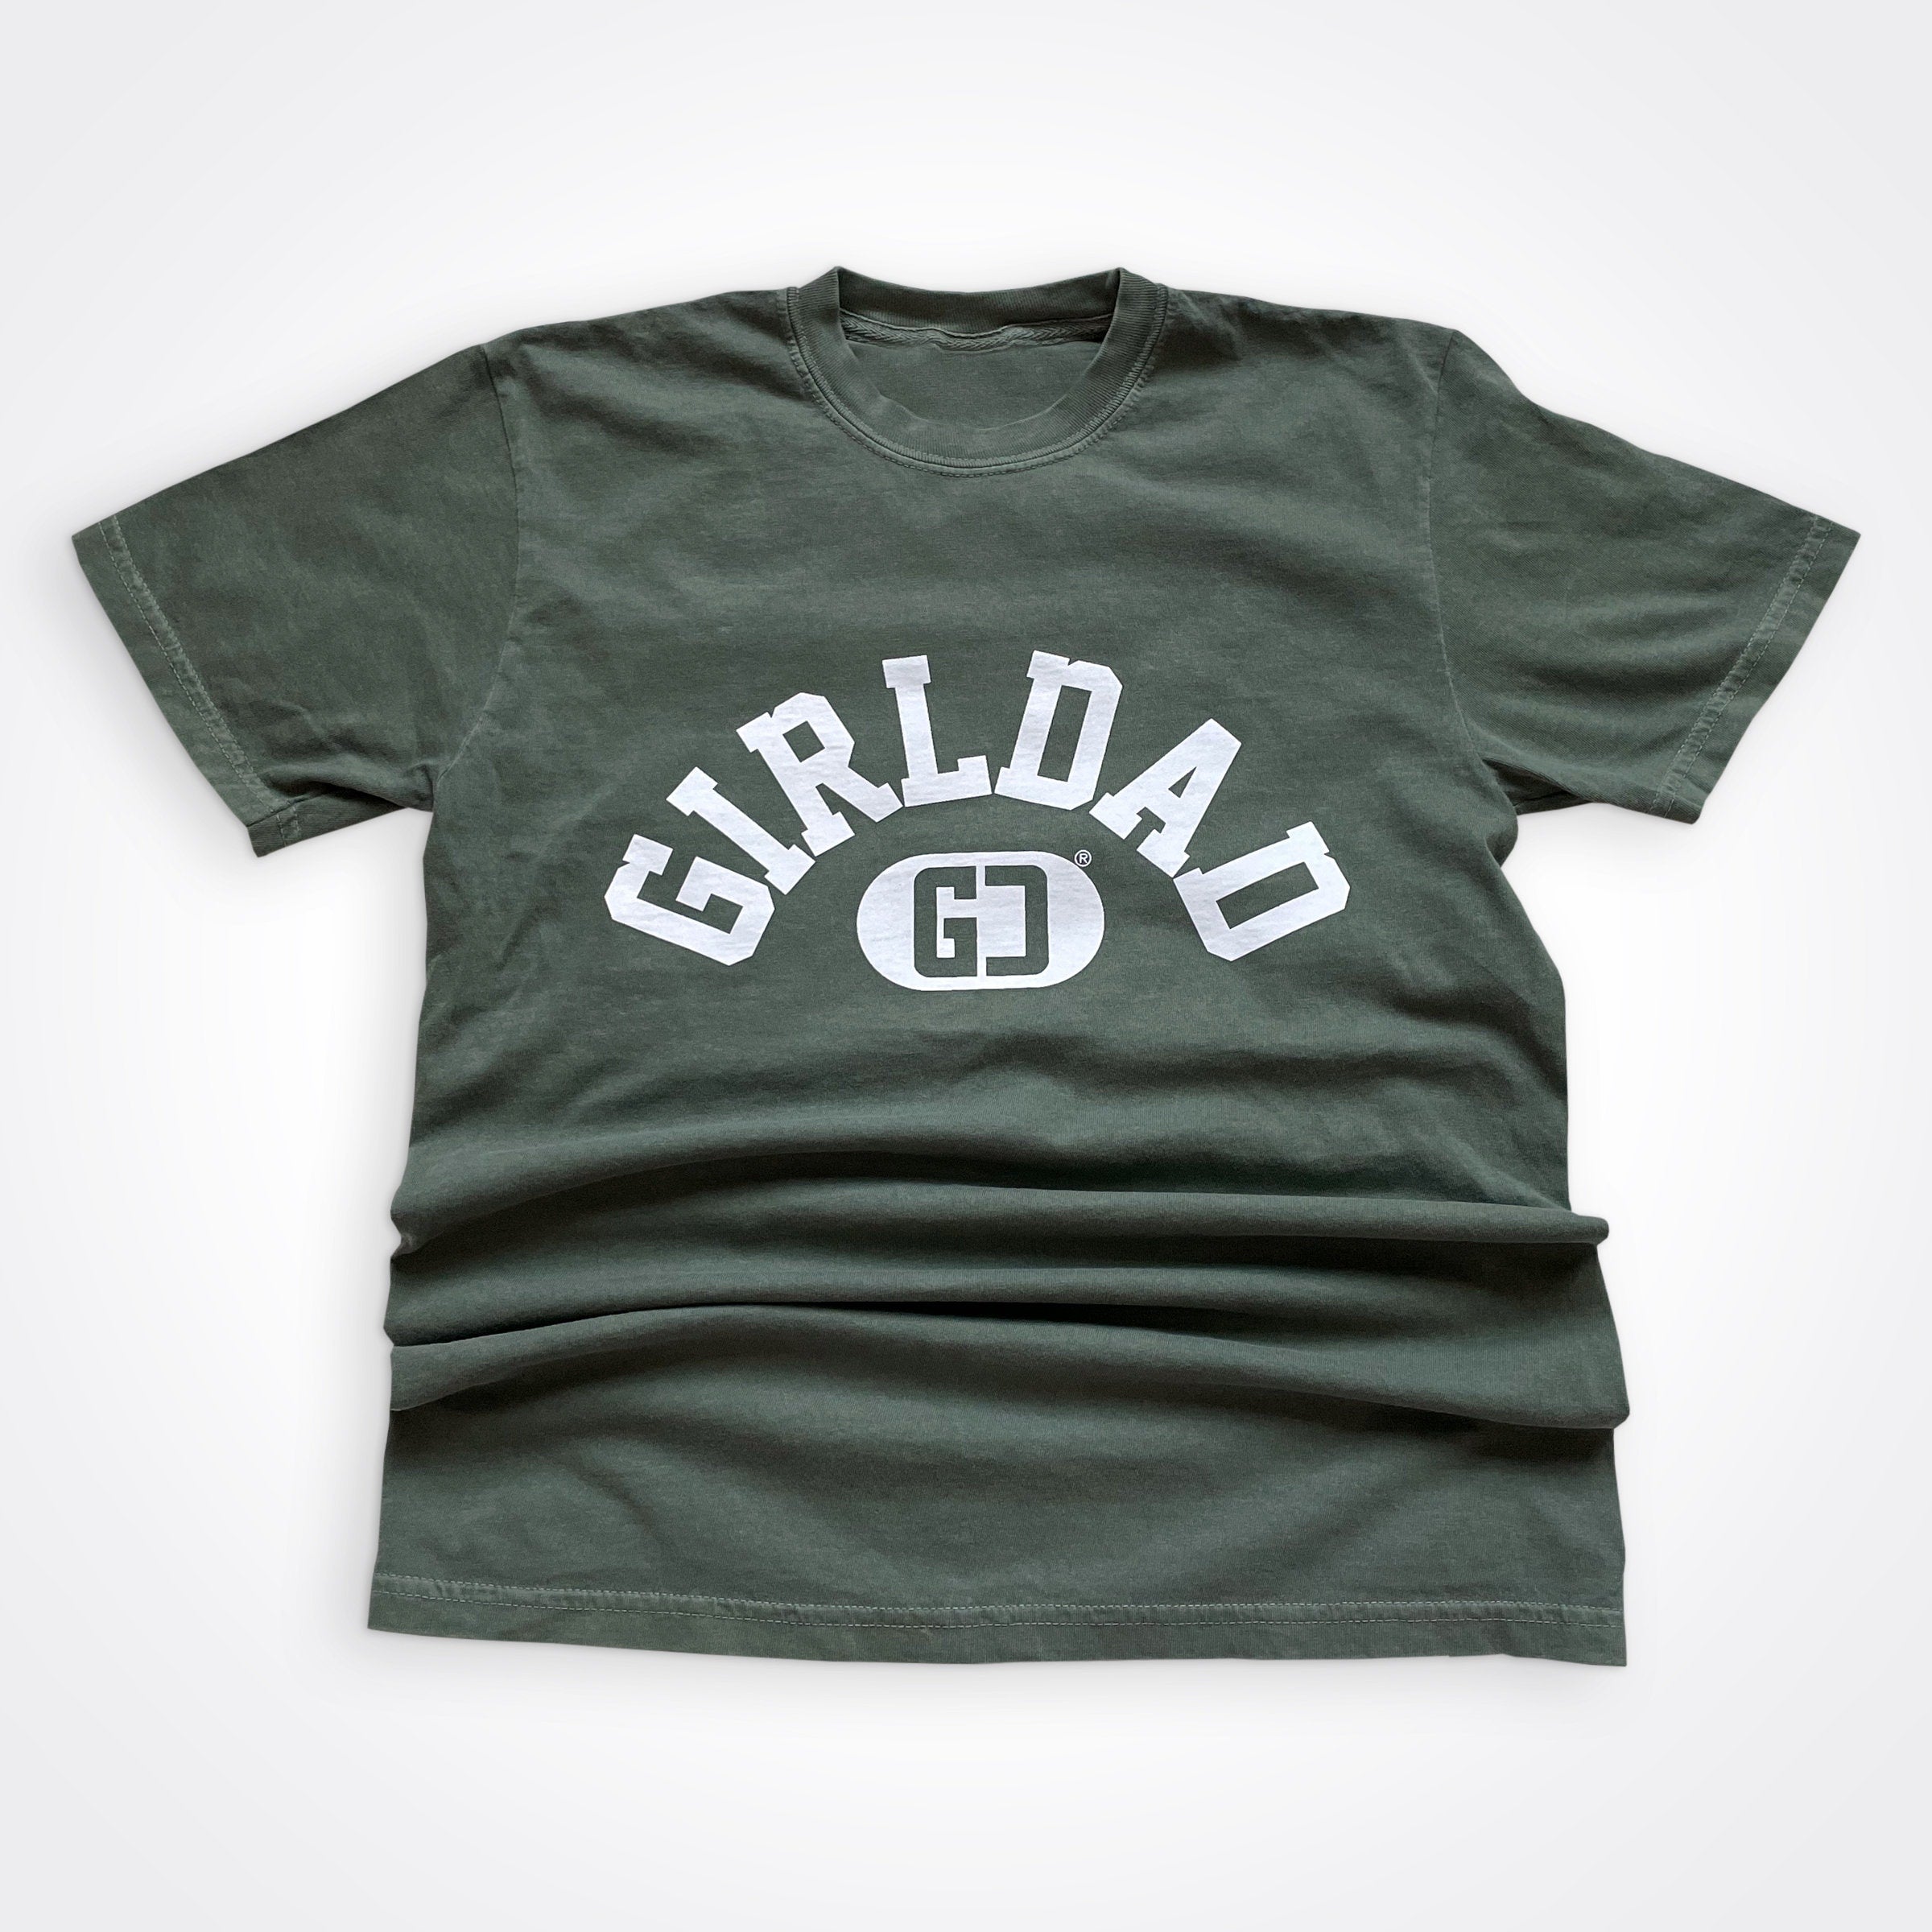 Girldad® Varsity Shirt in Moss Color WHL